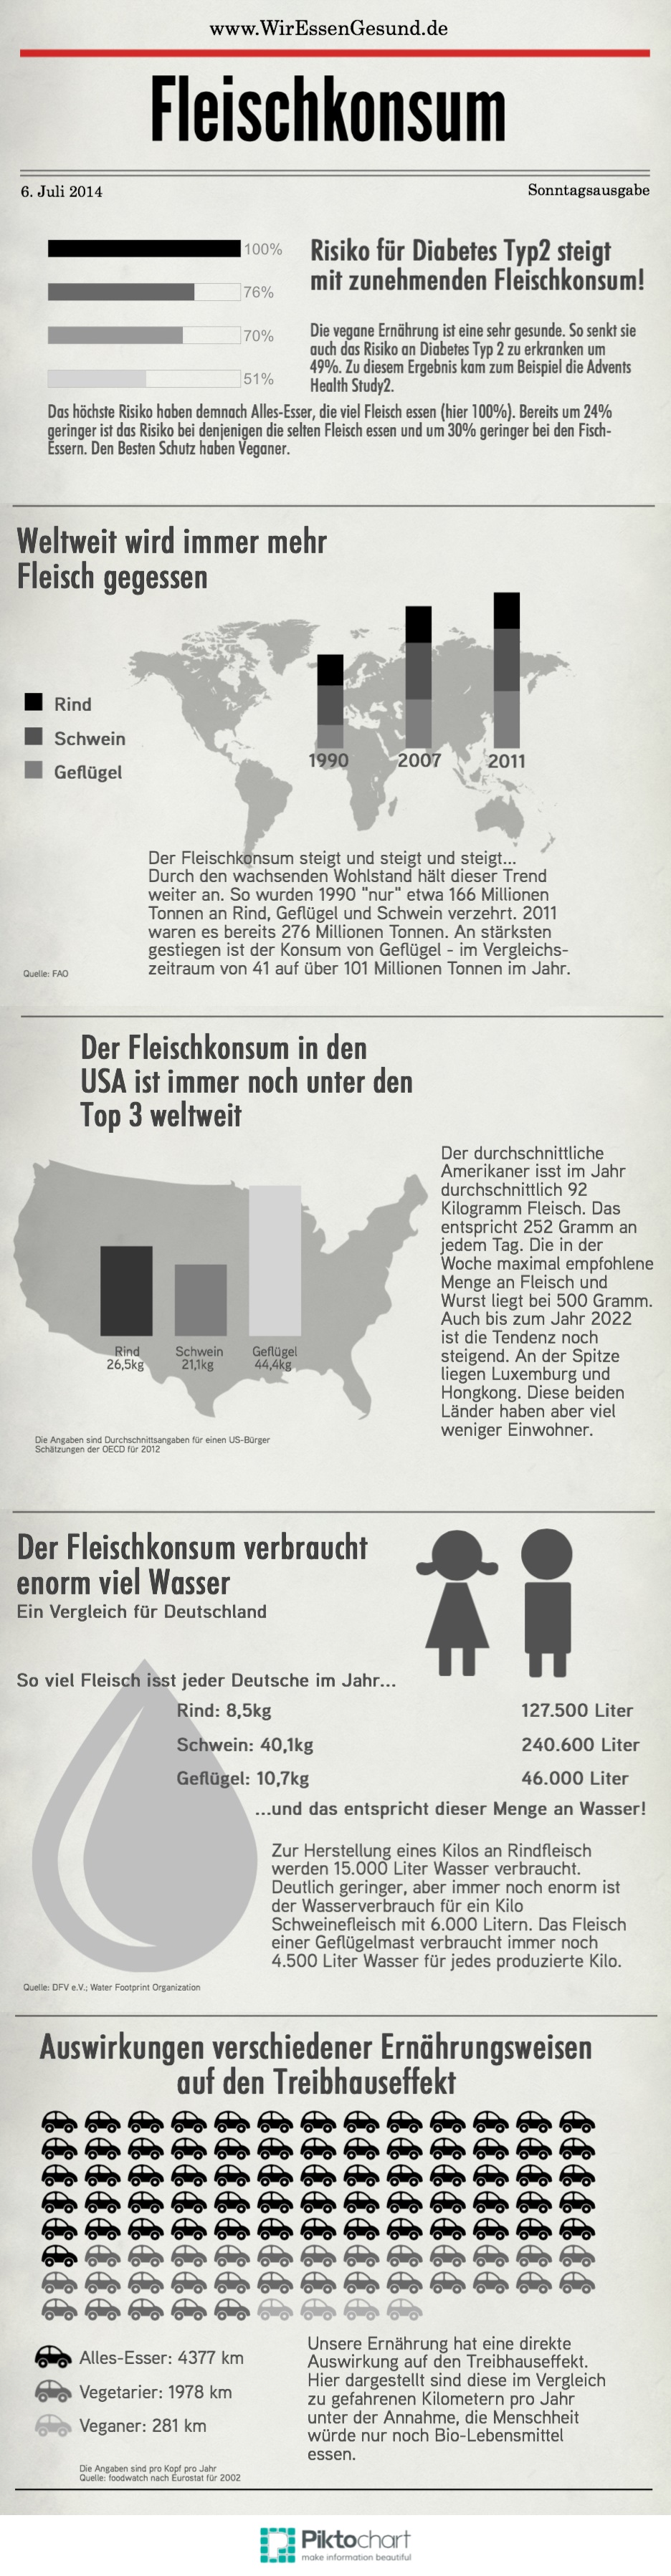 Fleischkonsum_infografik